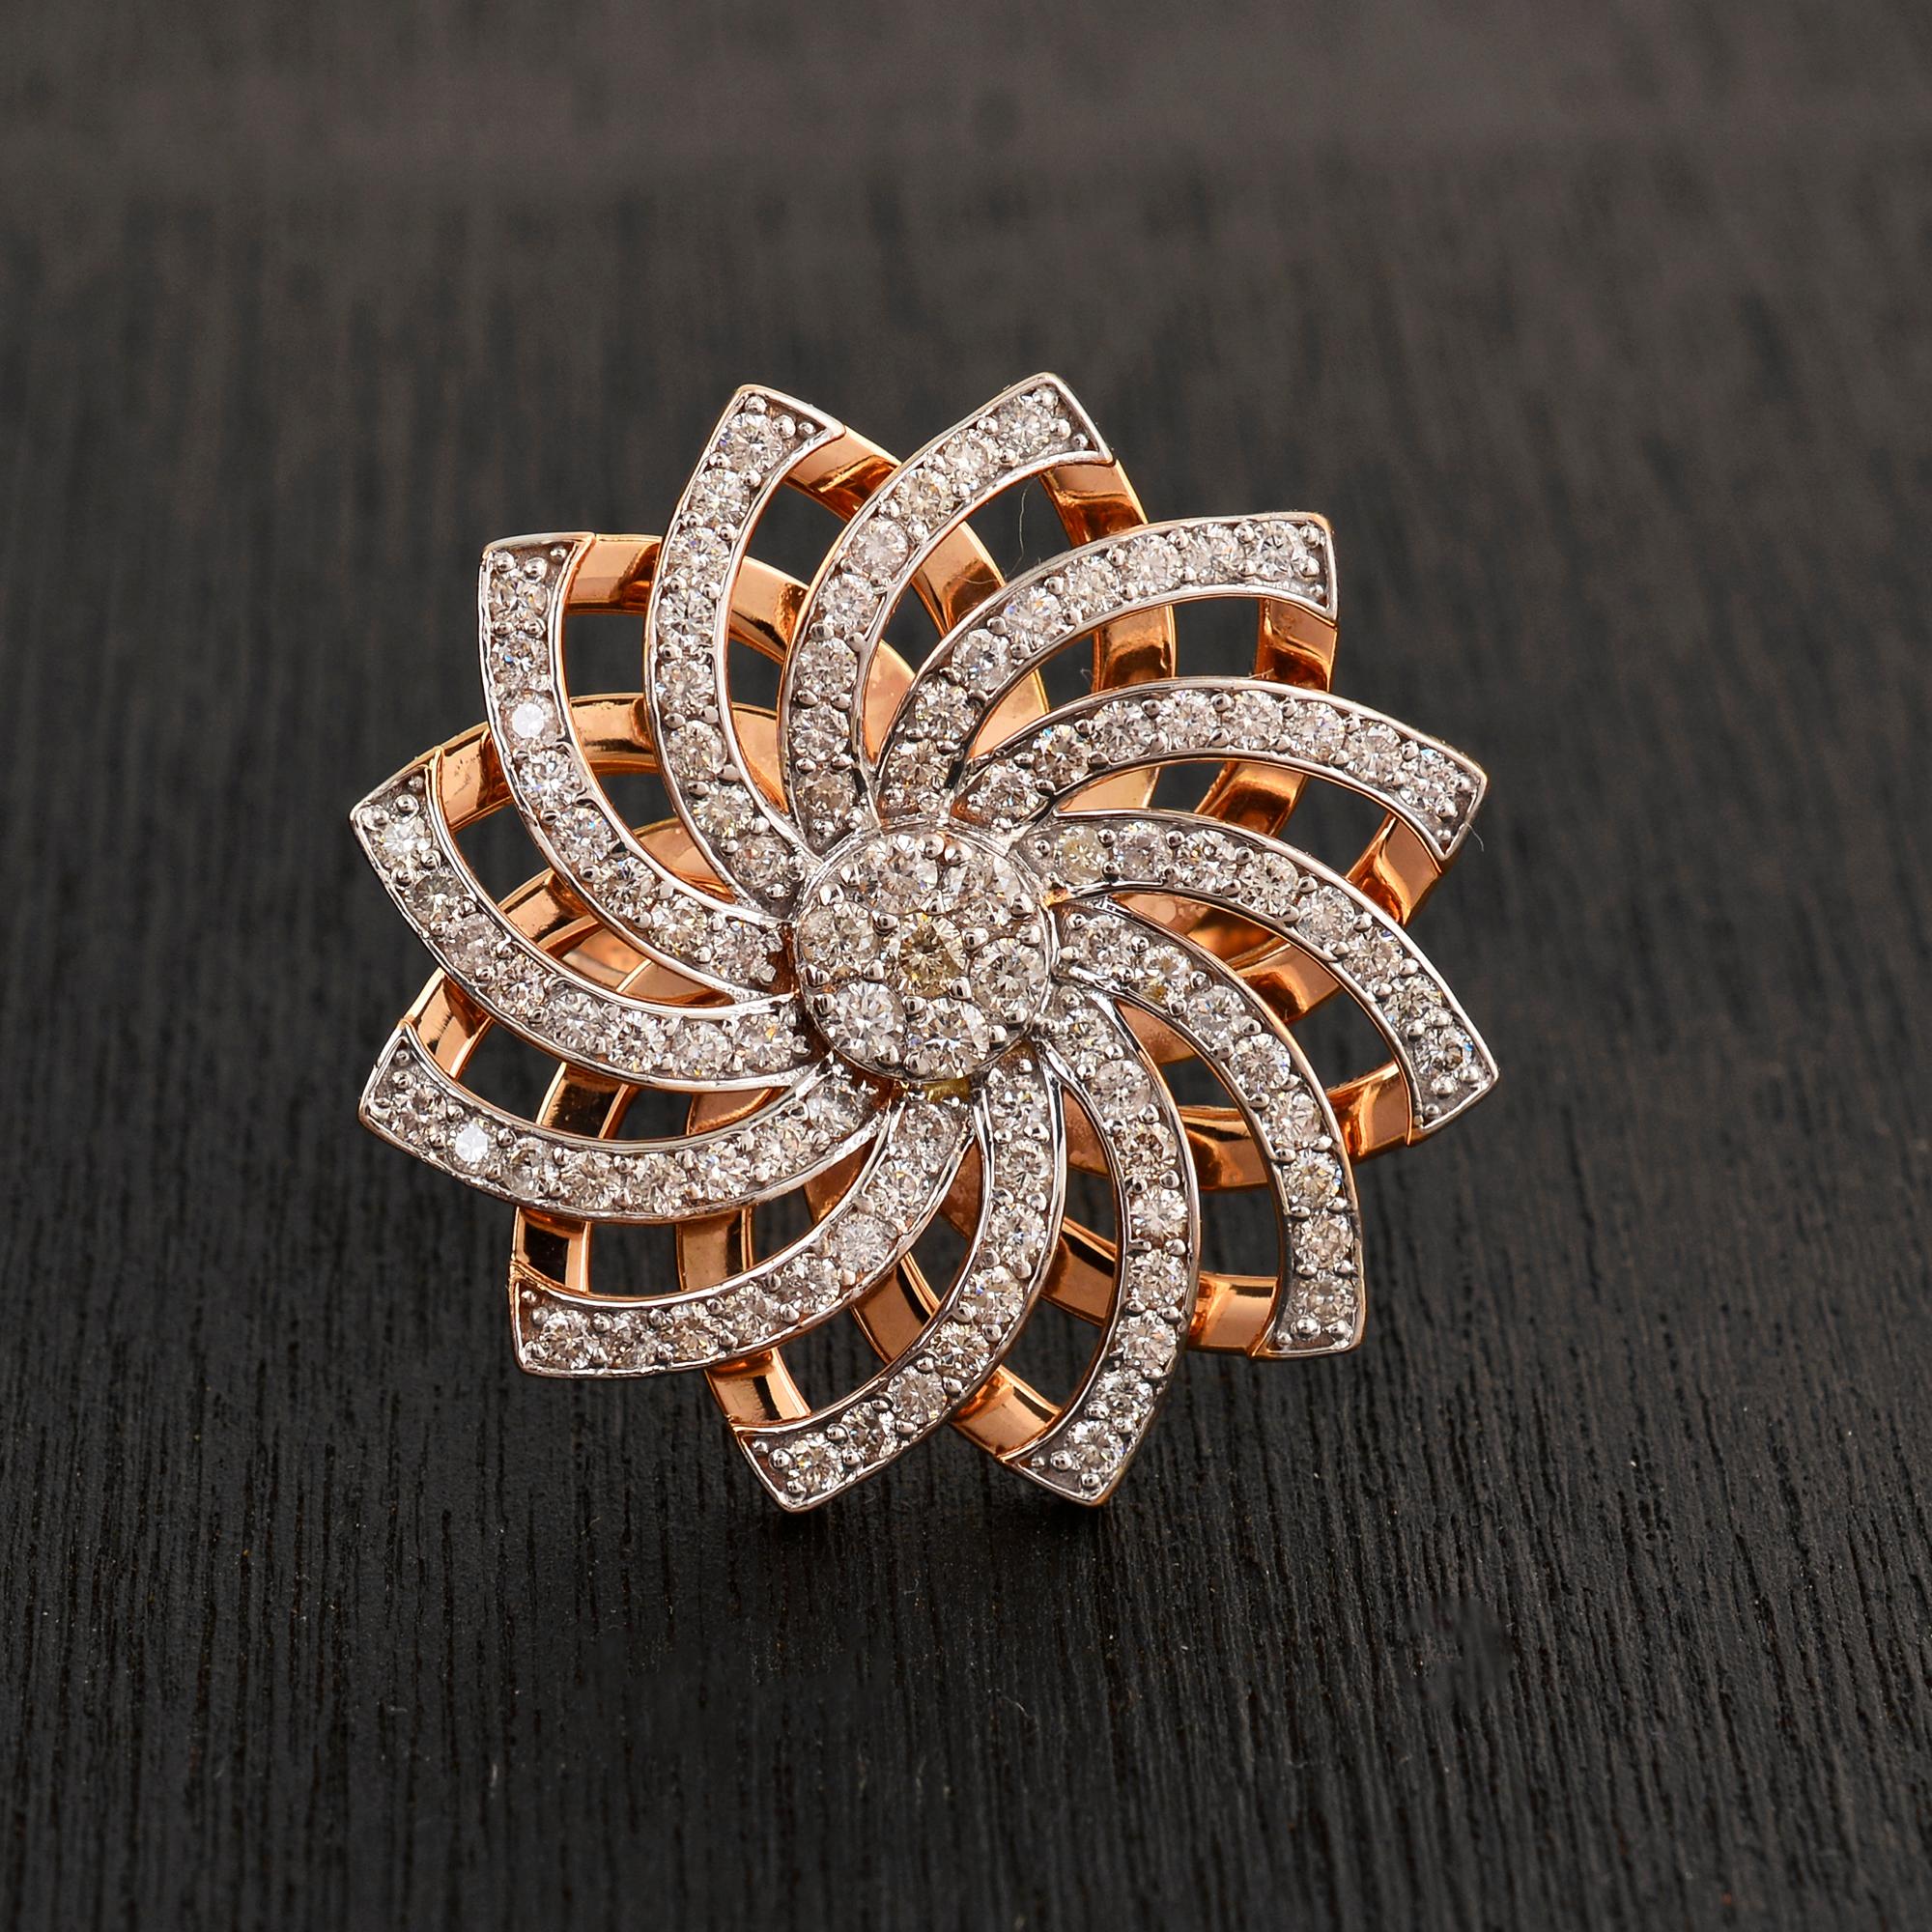 For Sale:  2.10 Carat SI Clarity HI Color Diamond Flower Ring 18 Karat Rose Gold Jewelry 7